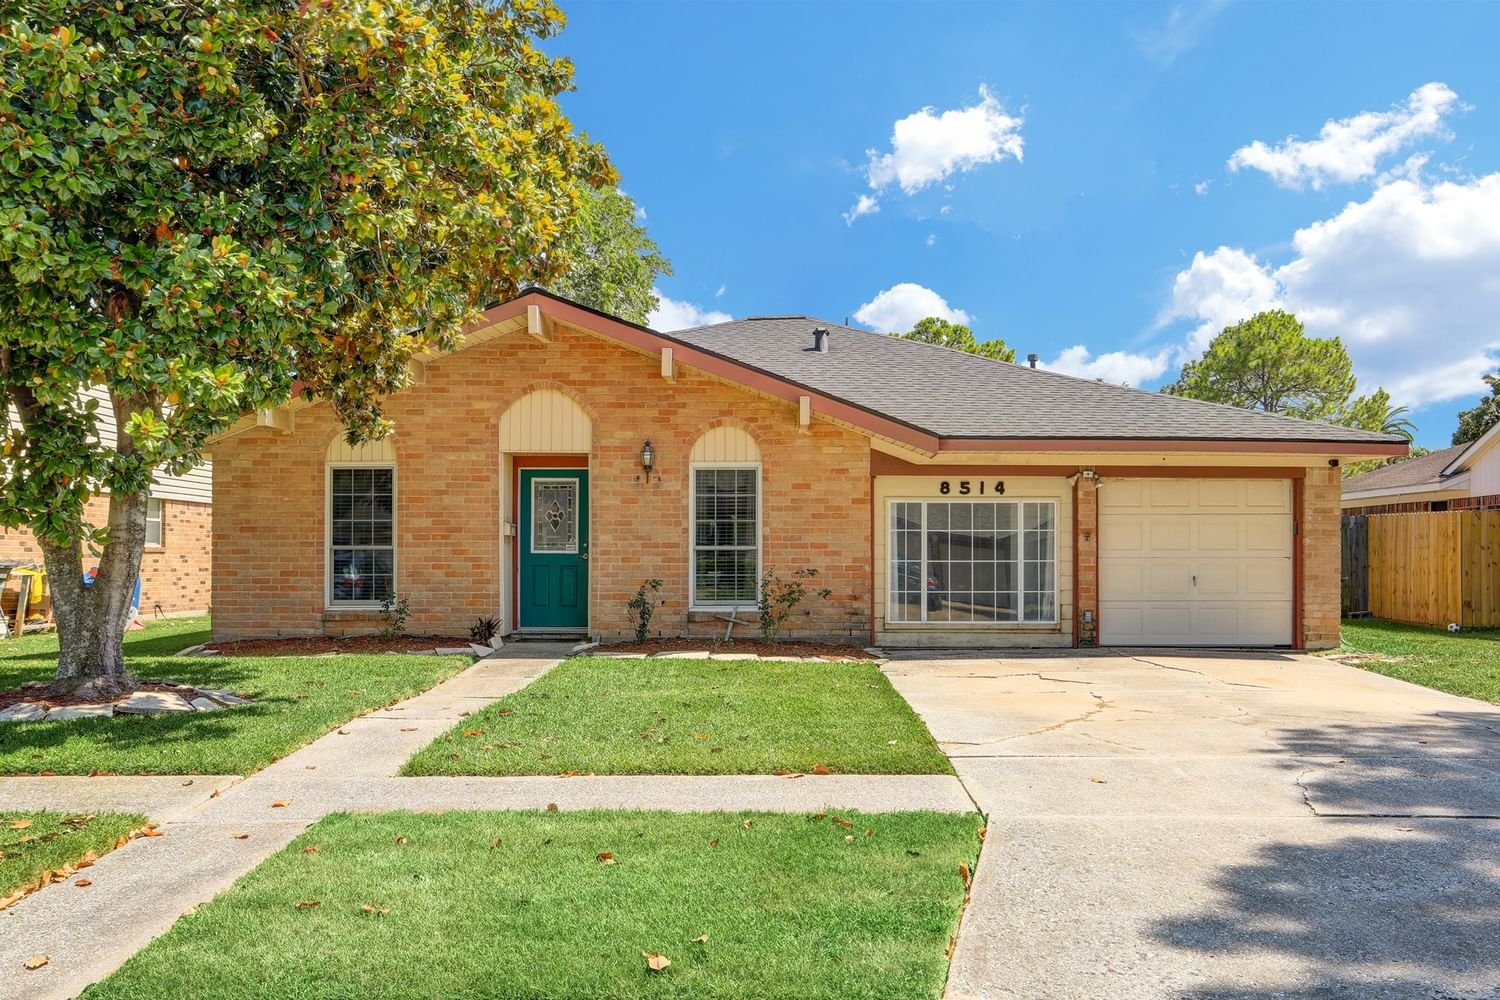 Real estate property located at 8514 Collingsdale, Harris, Brookglen, La Porte, TX, US